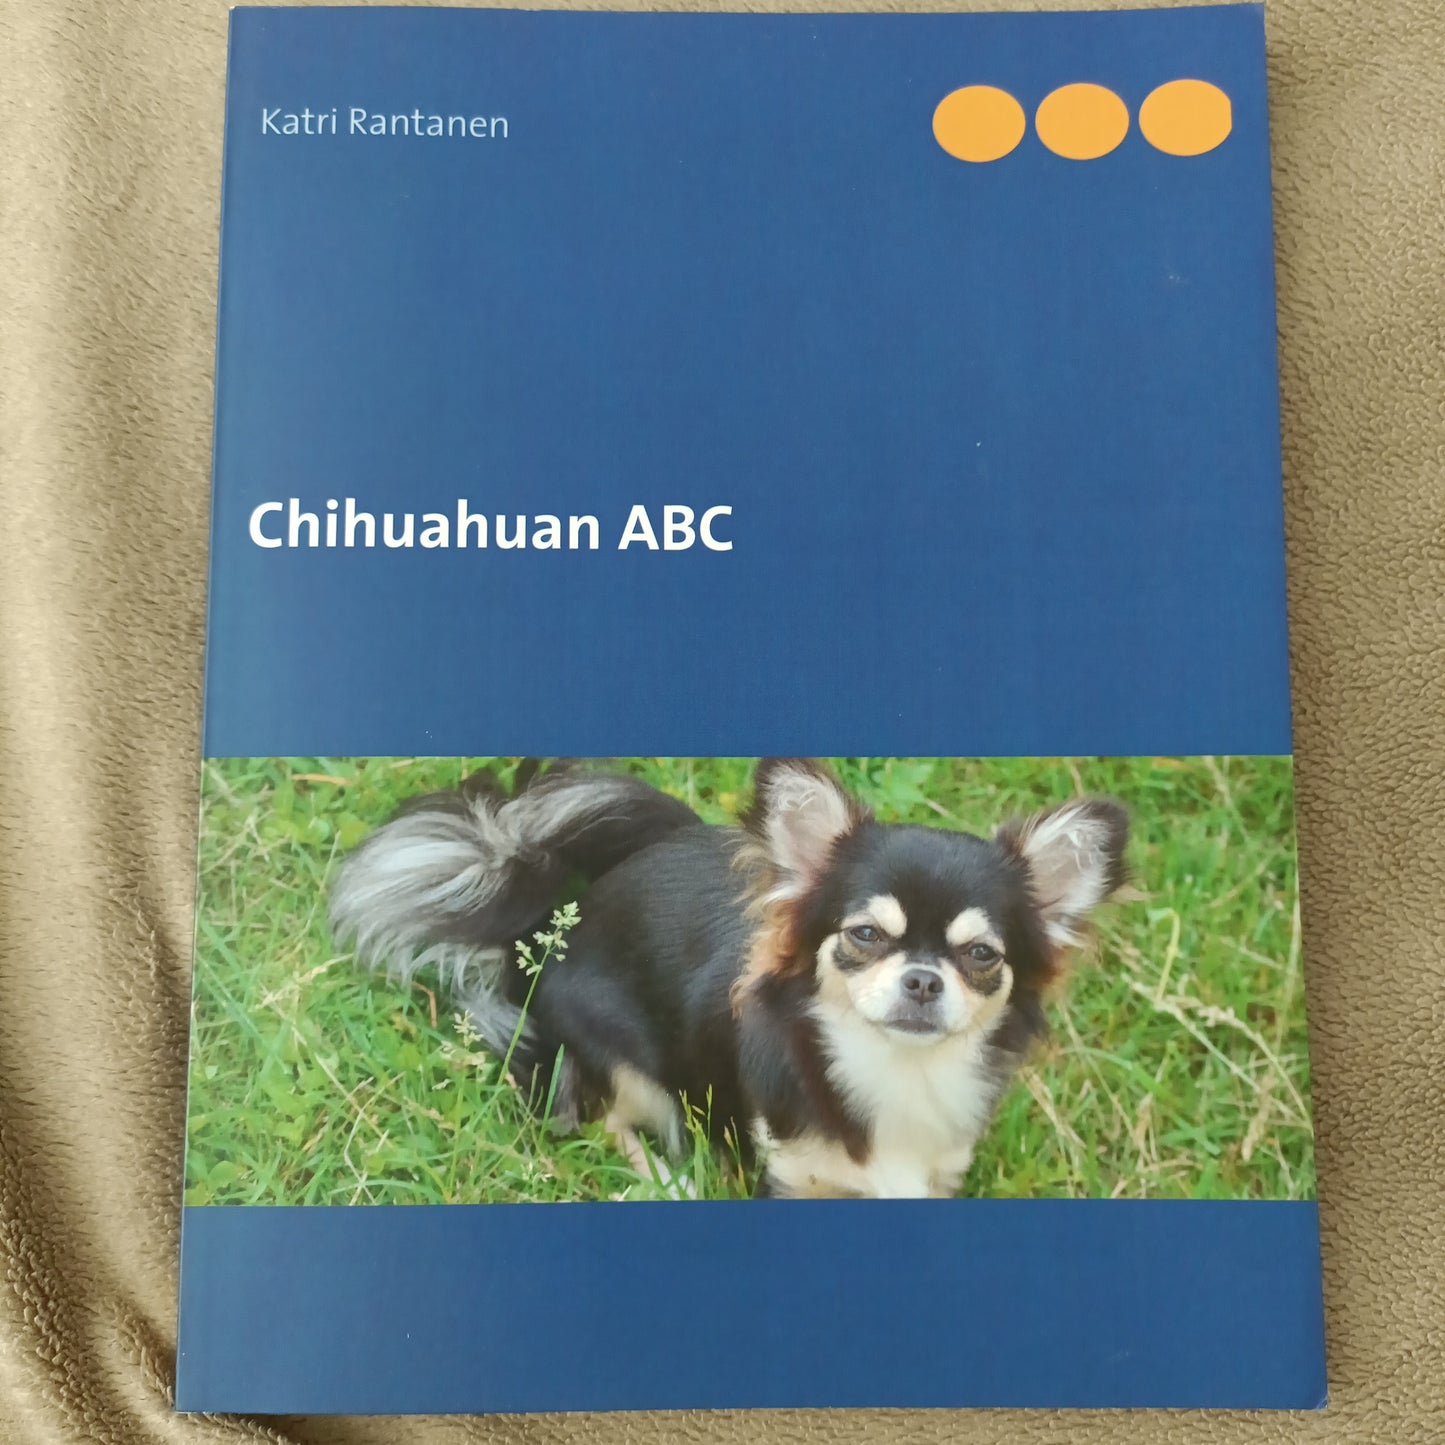 Chihuahuan ABC